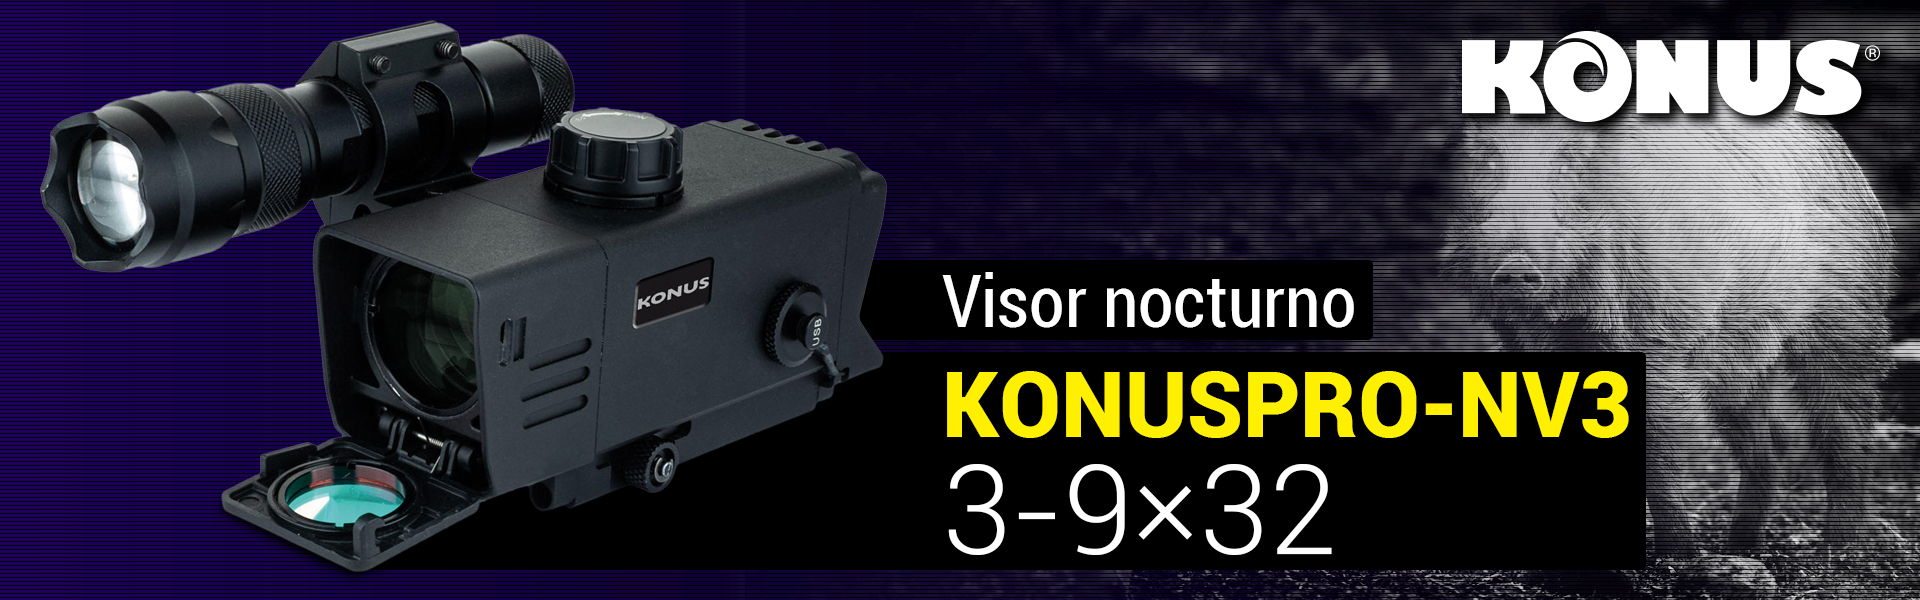 KONUSPRO-NV3-3-9-32-_monocular-nocturno_-banner-web